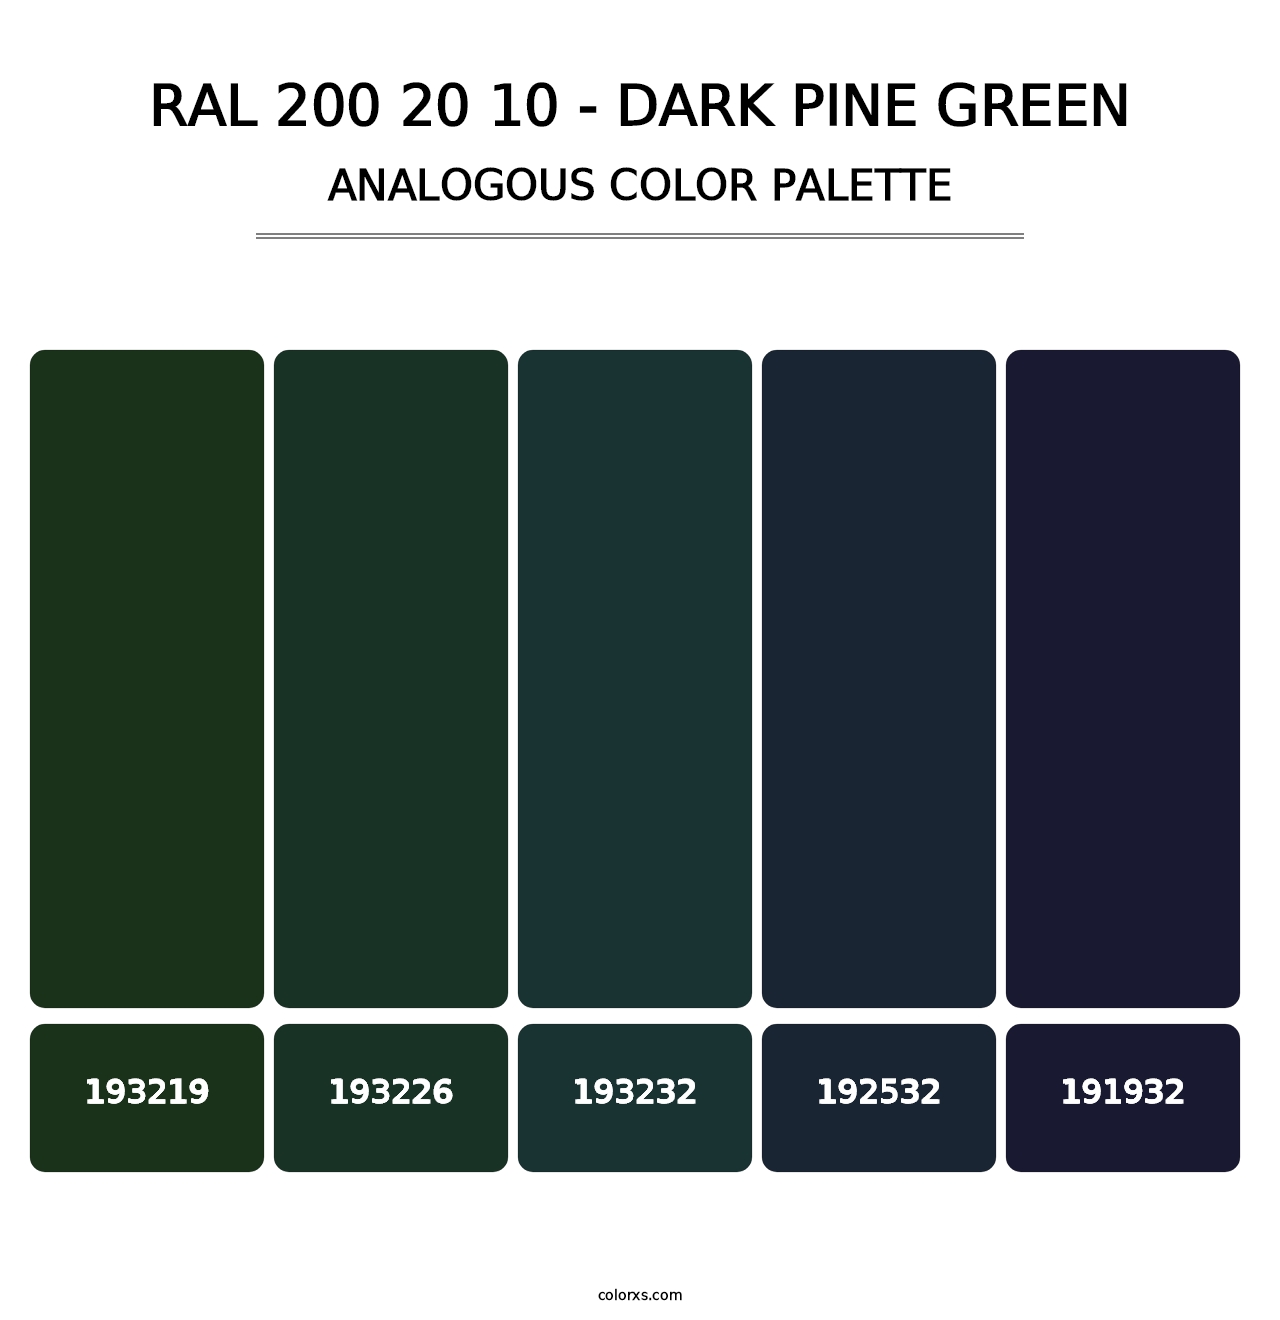 RAL 200 20 10 - Dark Pine Green - Analogous Color Palette